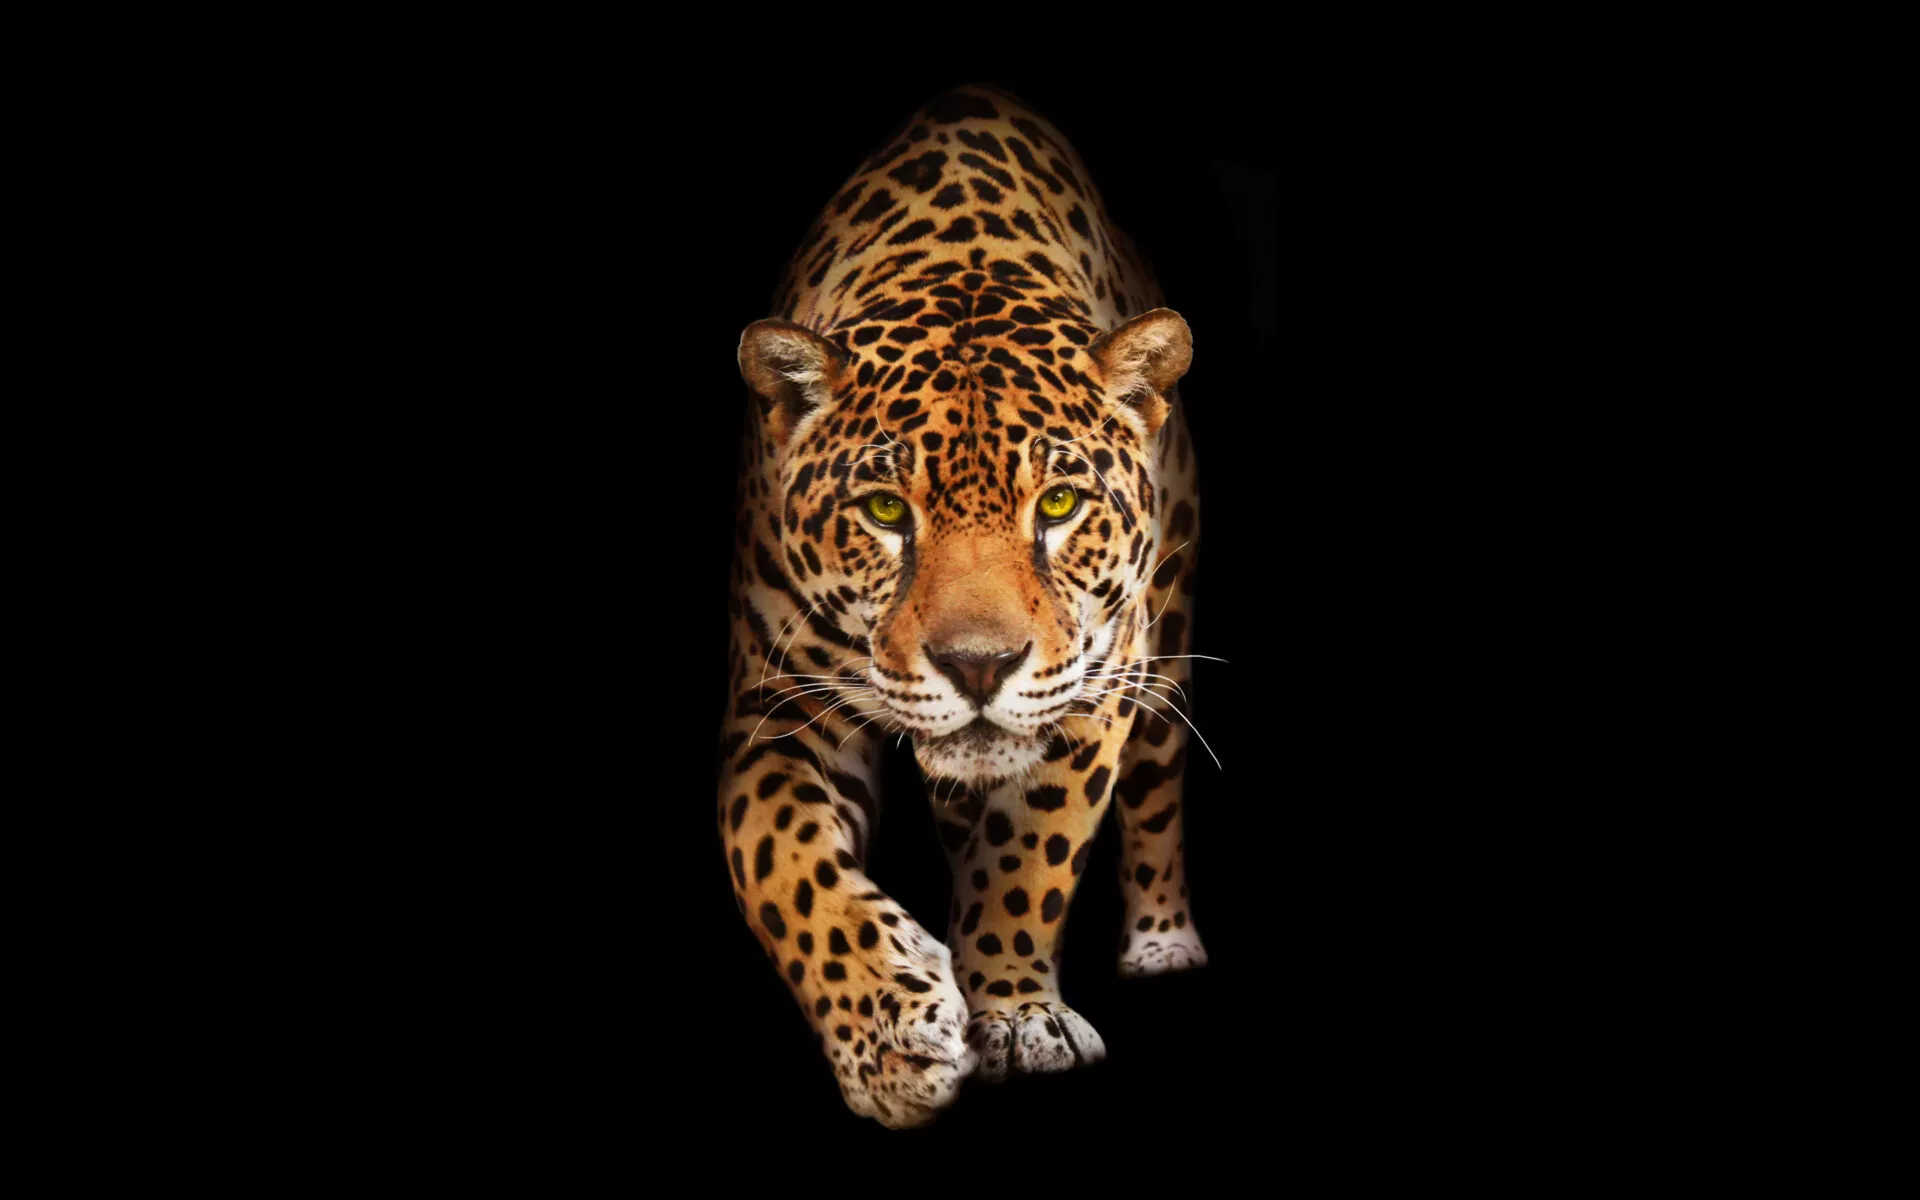 Share 95+ about jaguar wallpaper hd latest .vn